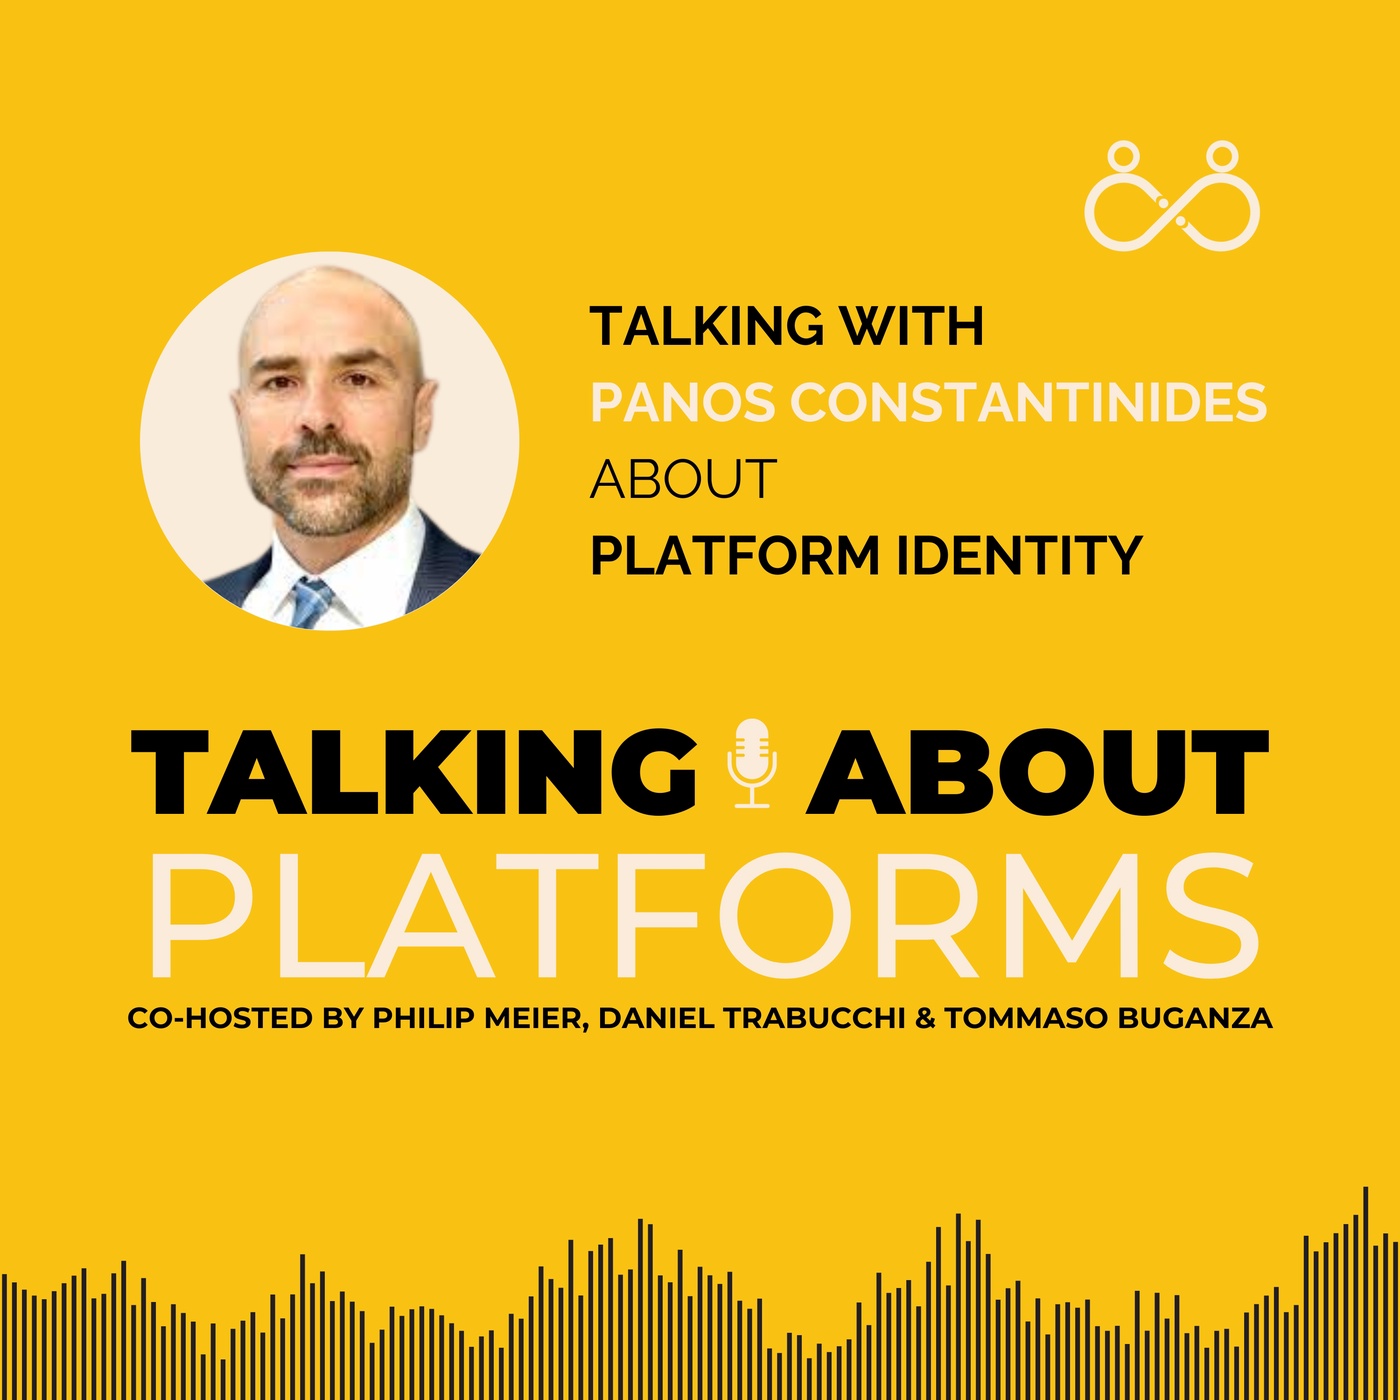 Platform identity with Panos Constantinides